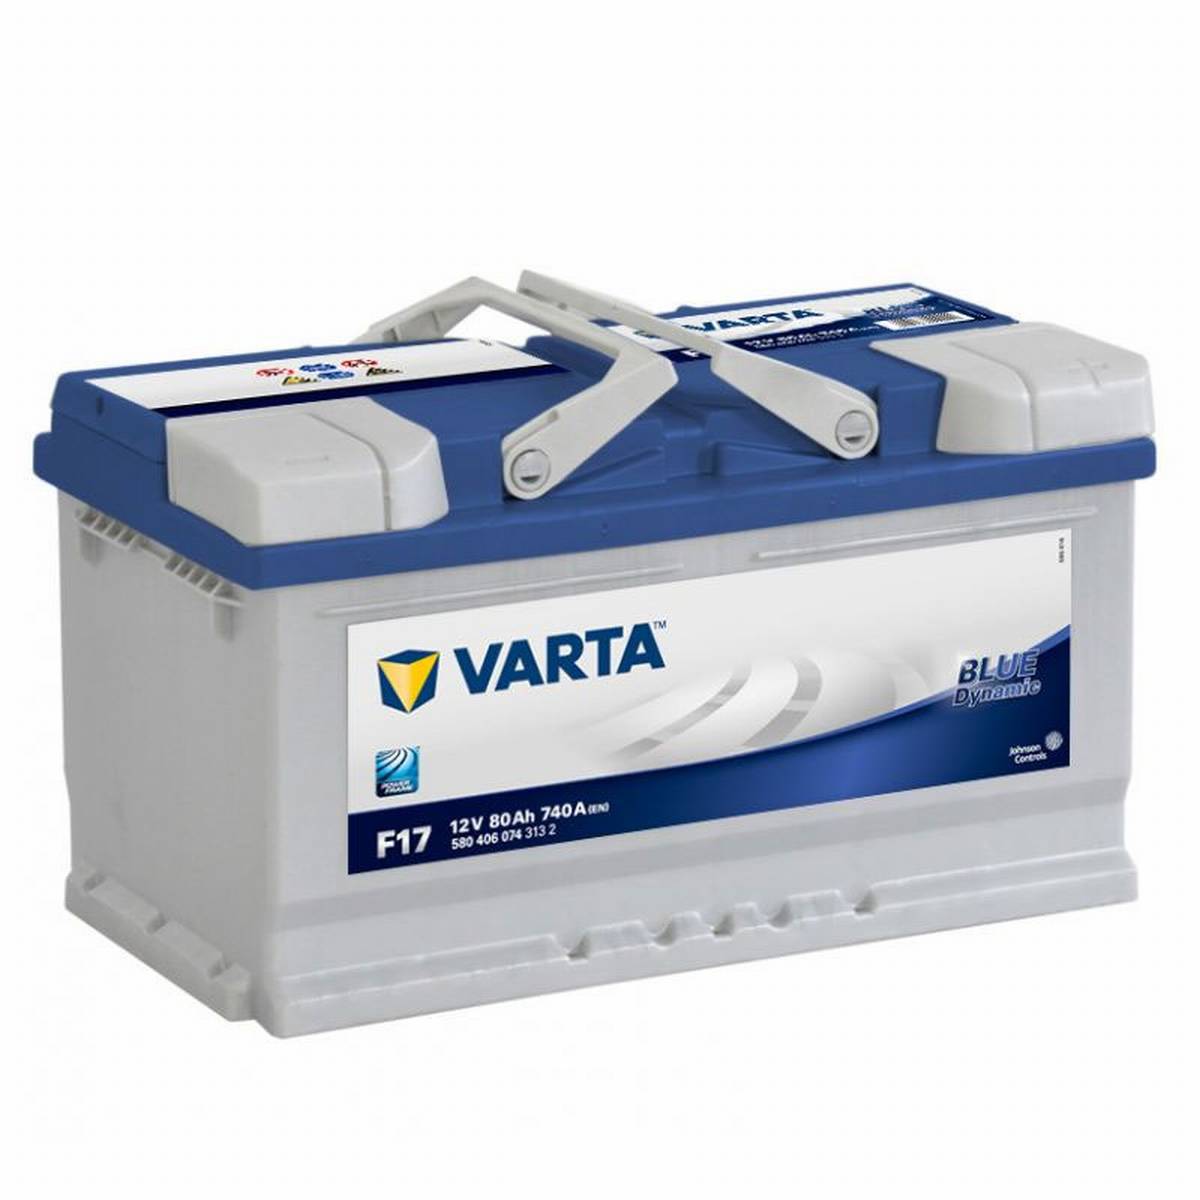 VARTA F17 Blue Dynamic 12V 80Ah 740A Batteria auto 580 406 074